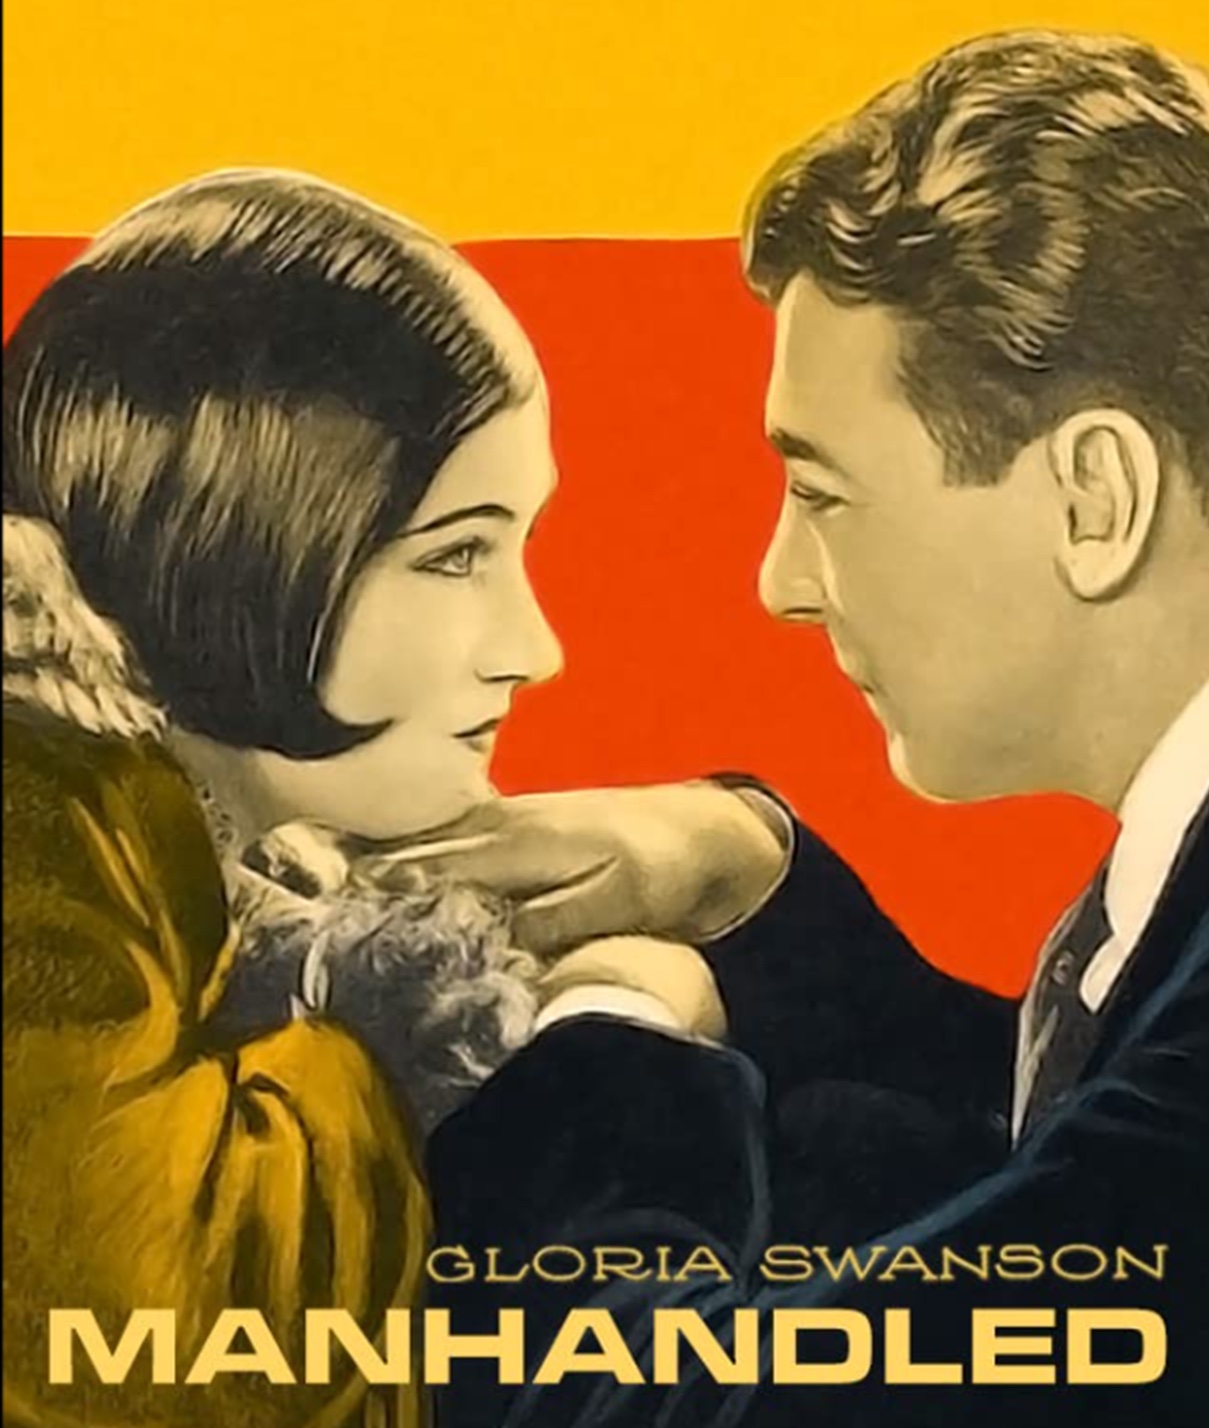 Manhandled 映画ポスター - カップルが手を繋いでいる黄色と赤の背景、テキストは Gloria Swanson Manhandled と読みます